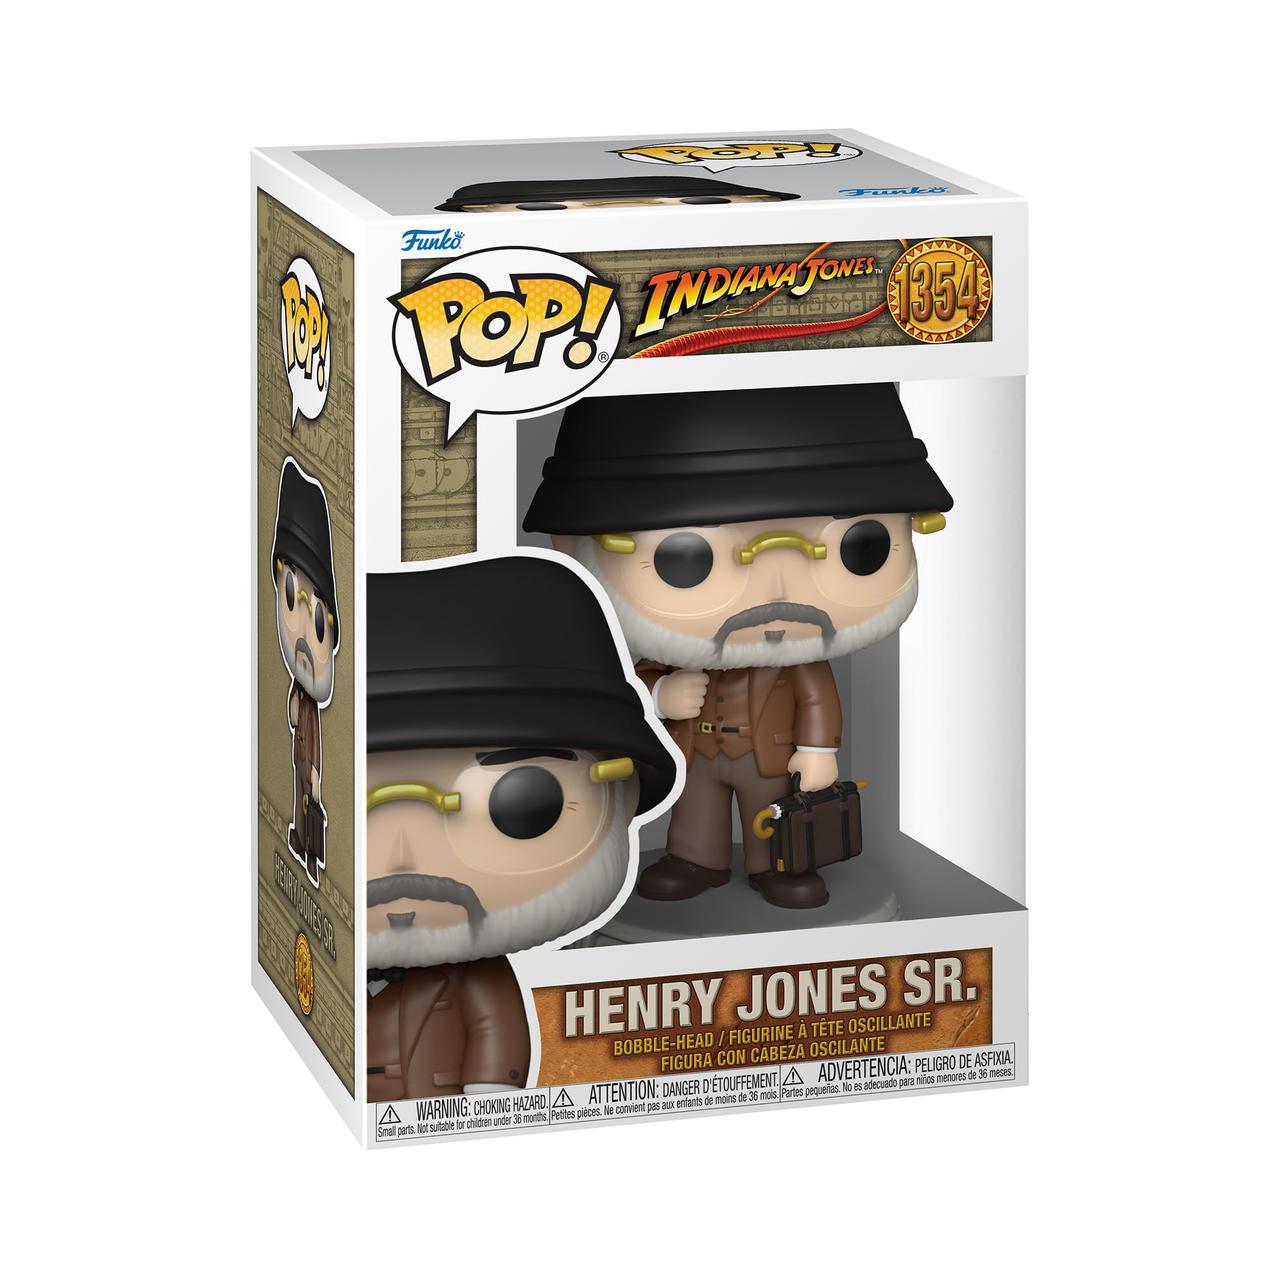 Фигурка Funko Pop Фанко Поп Indiana Jones Henry Jones Sr Индиана Джонс Генри Джонс Старший 10 см FP A MQ 1324 - фото 3